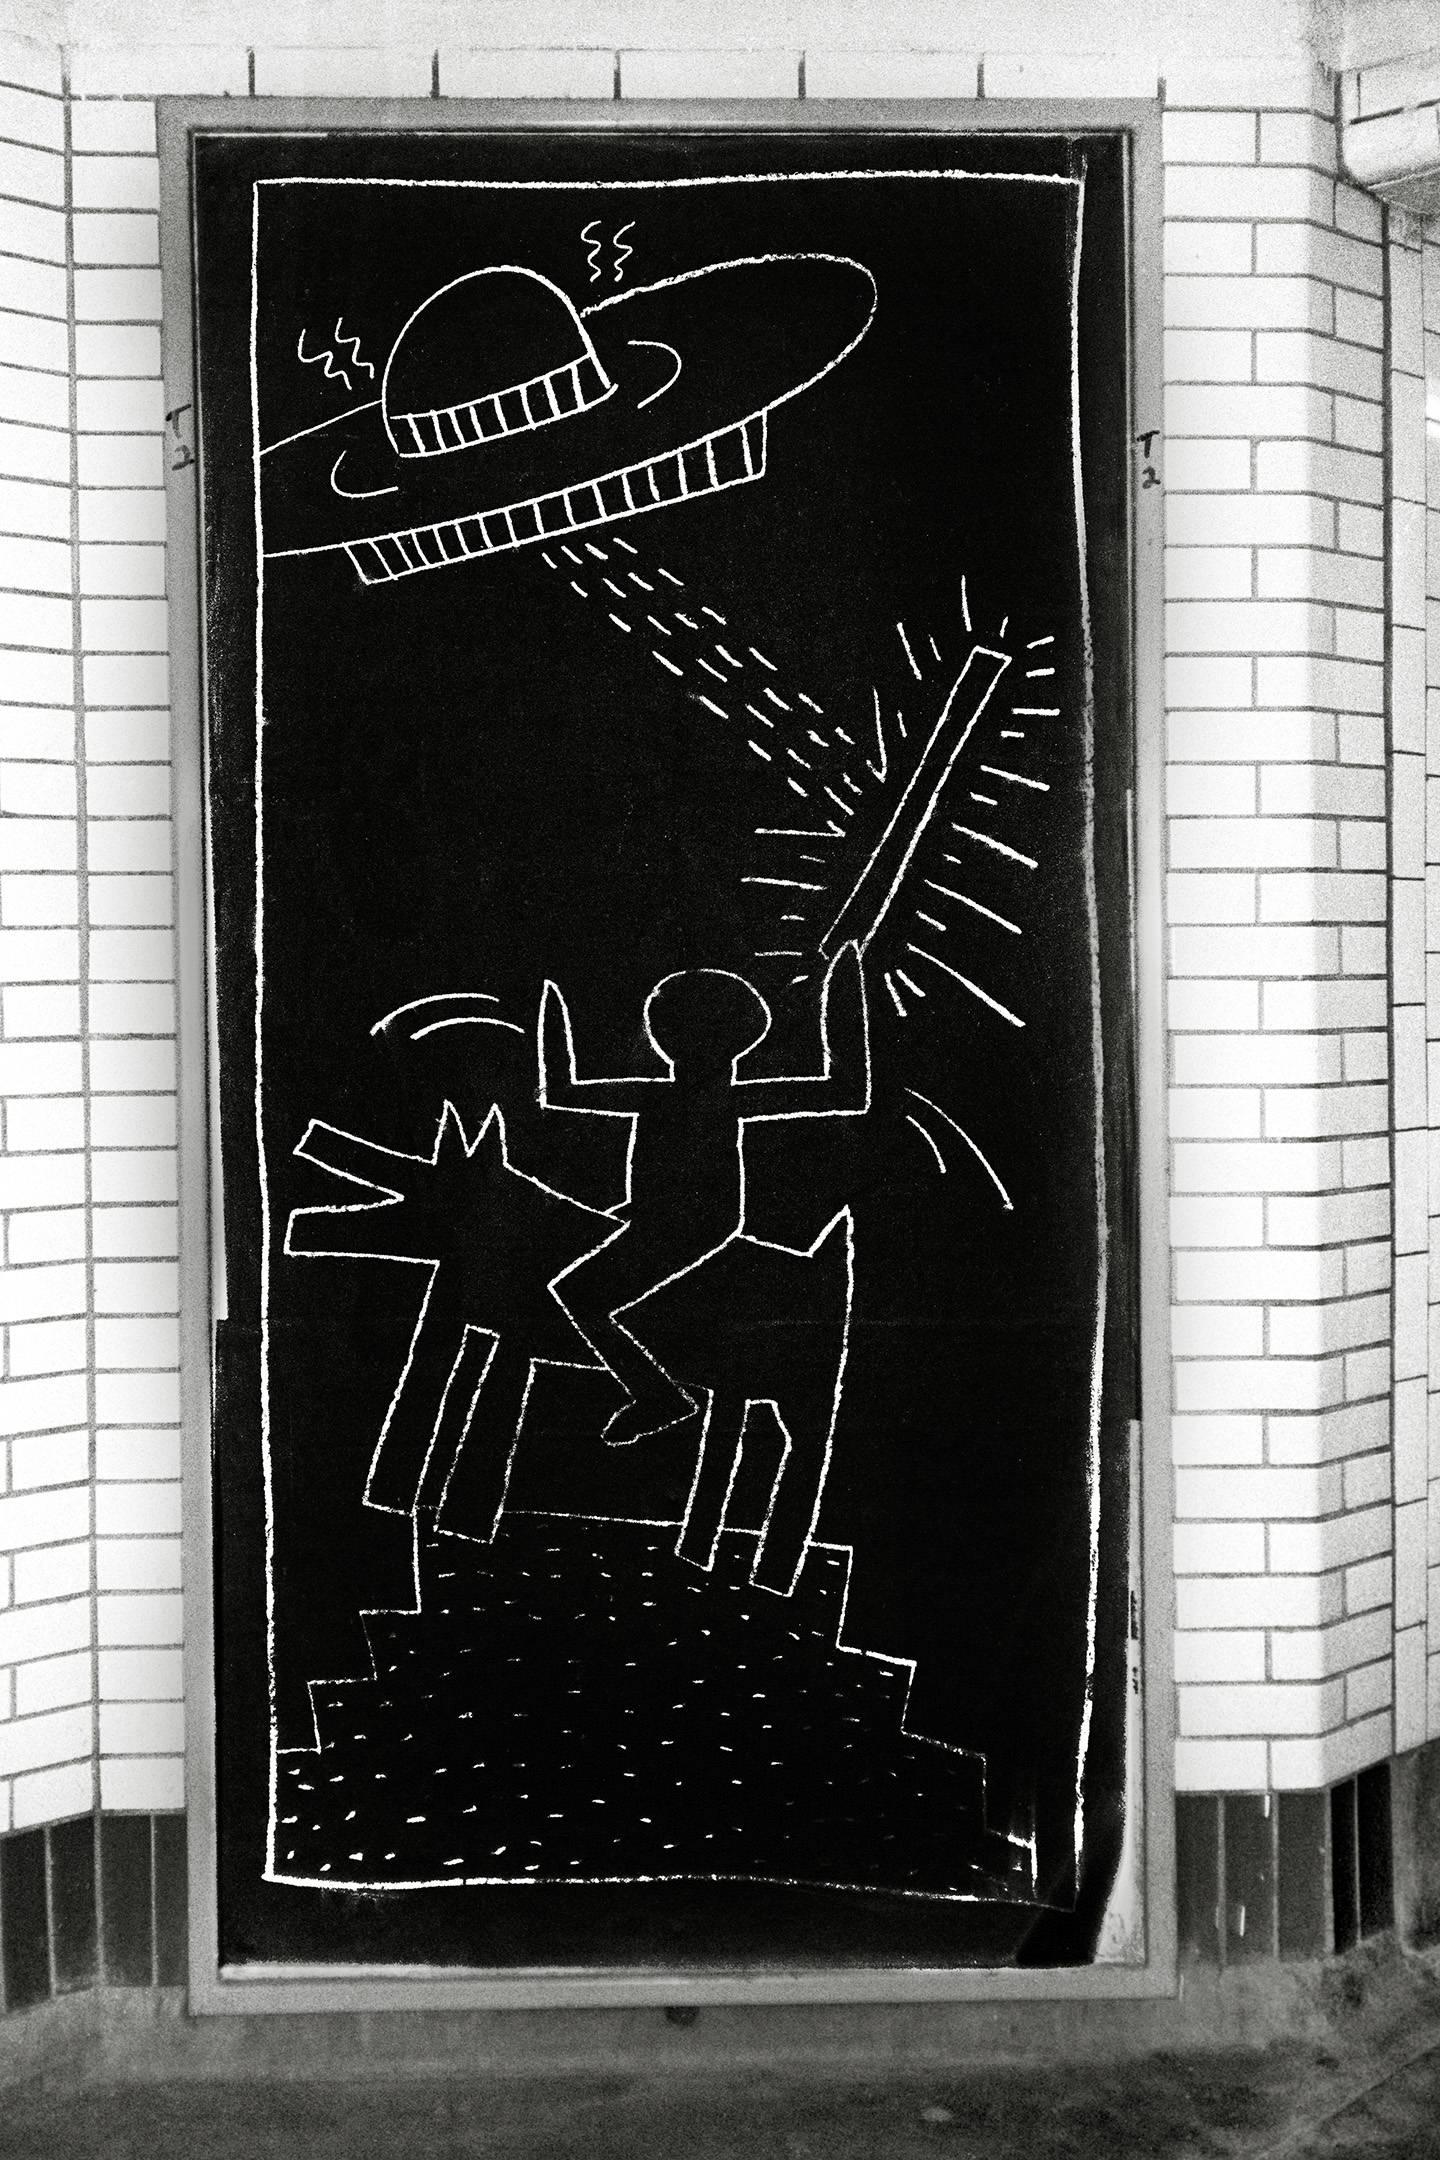 Fernando Natalici Figurative Photograph - Keith Haring Subway Art photo c.1981 (Keith Haring subway drawings) 